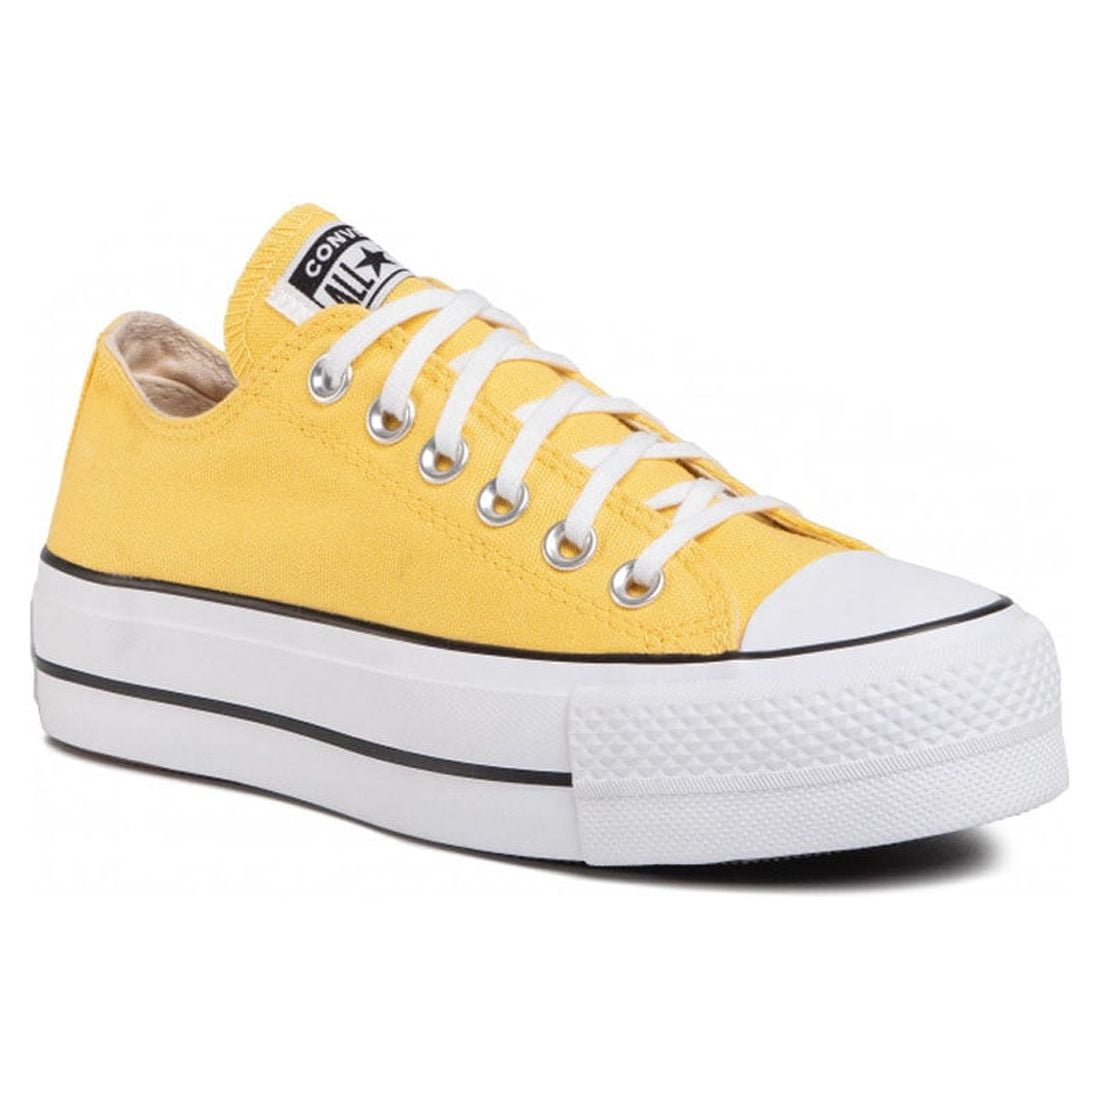 Converse Chuck Taylor All Star Shine Women/Adult shoe size 9 Casual 568627C Light Yellow - Walmart.com